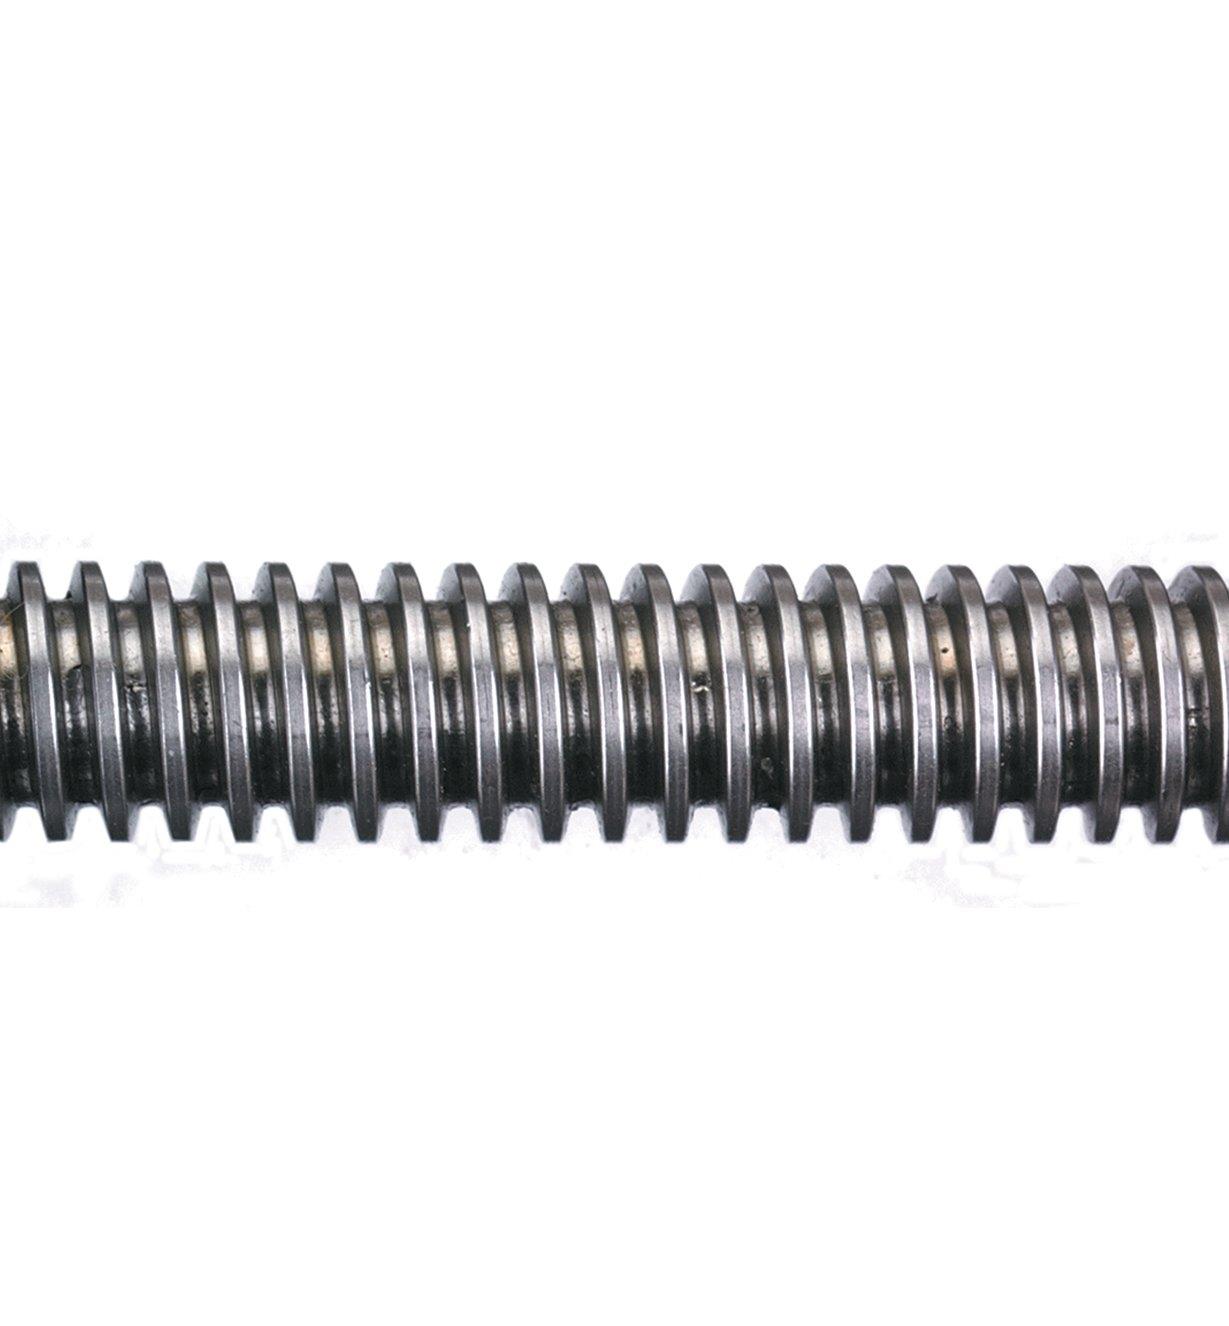 Close-up of Acme-threaded screw